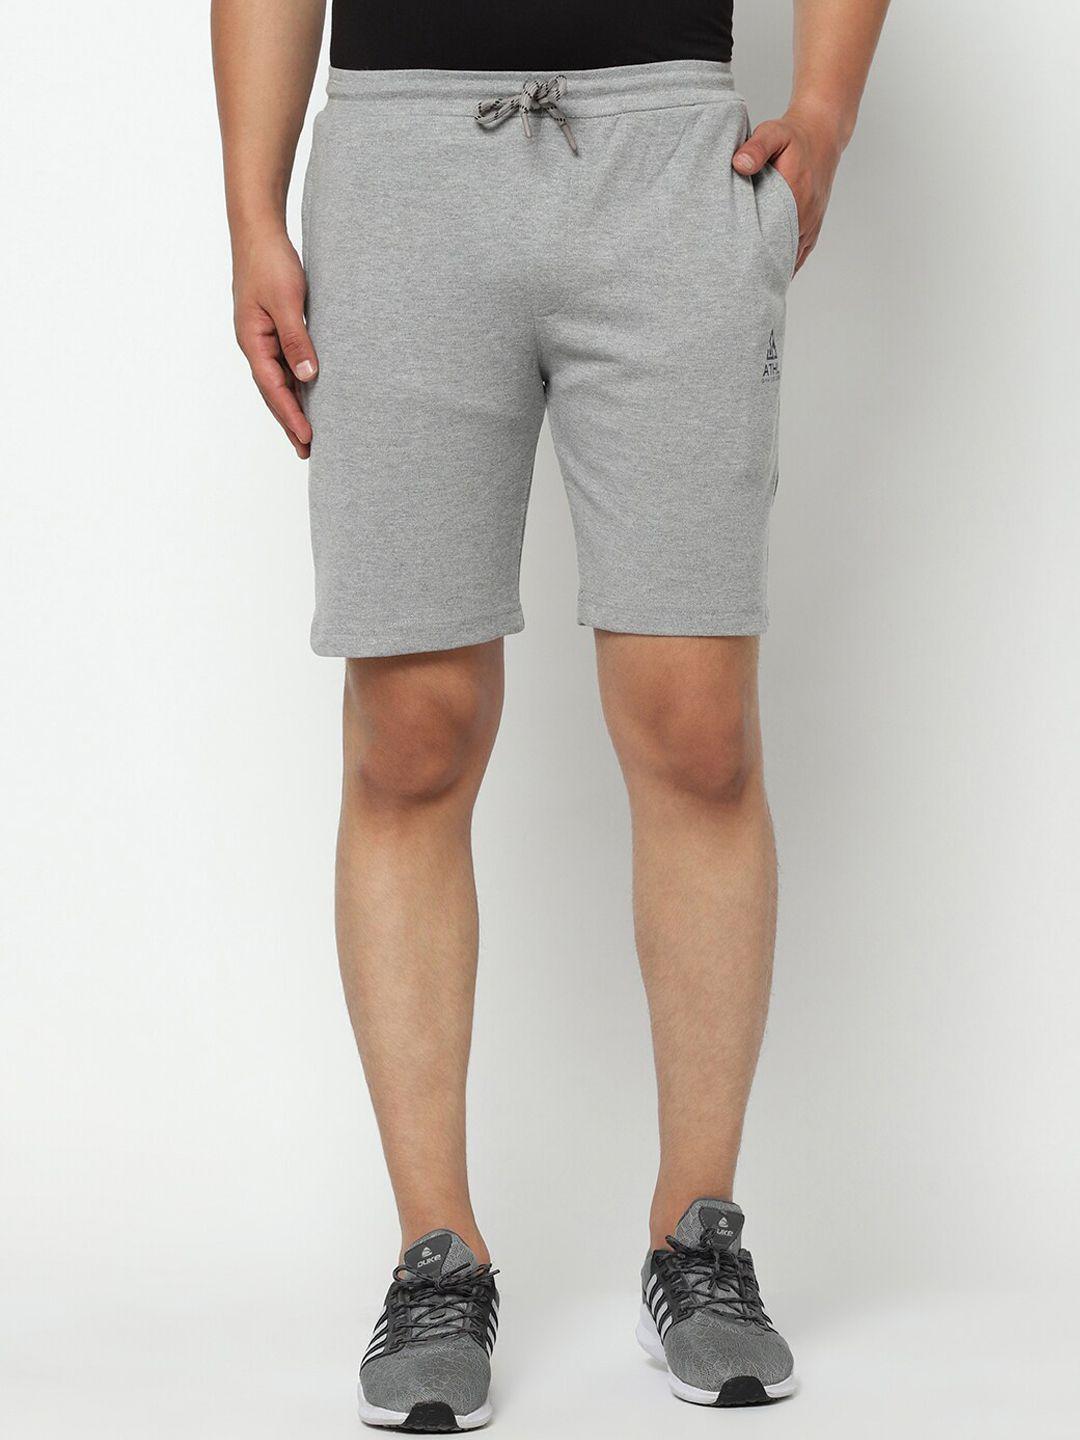 duke-men-outdoor-sports-shorts